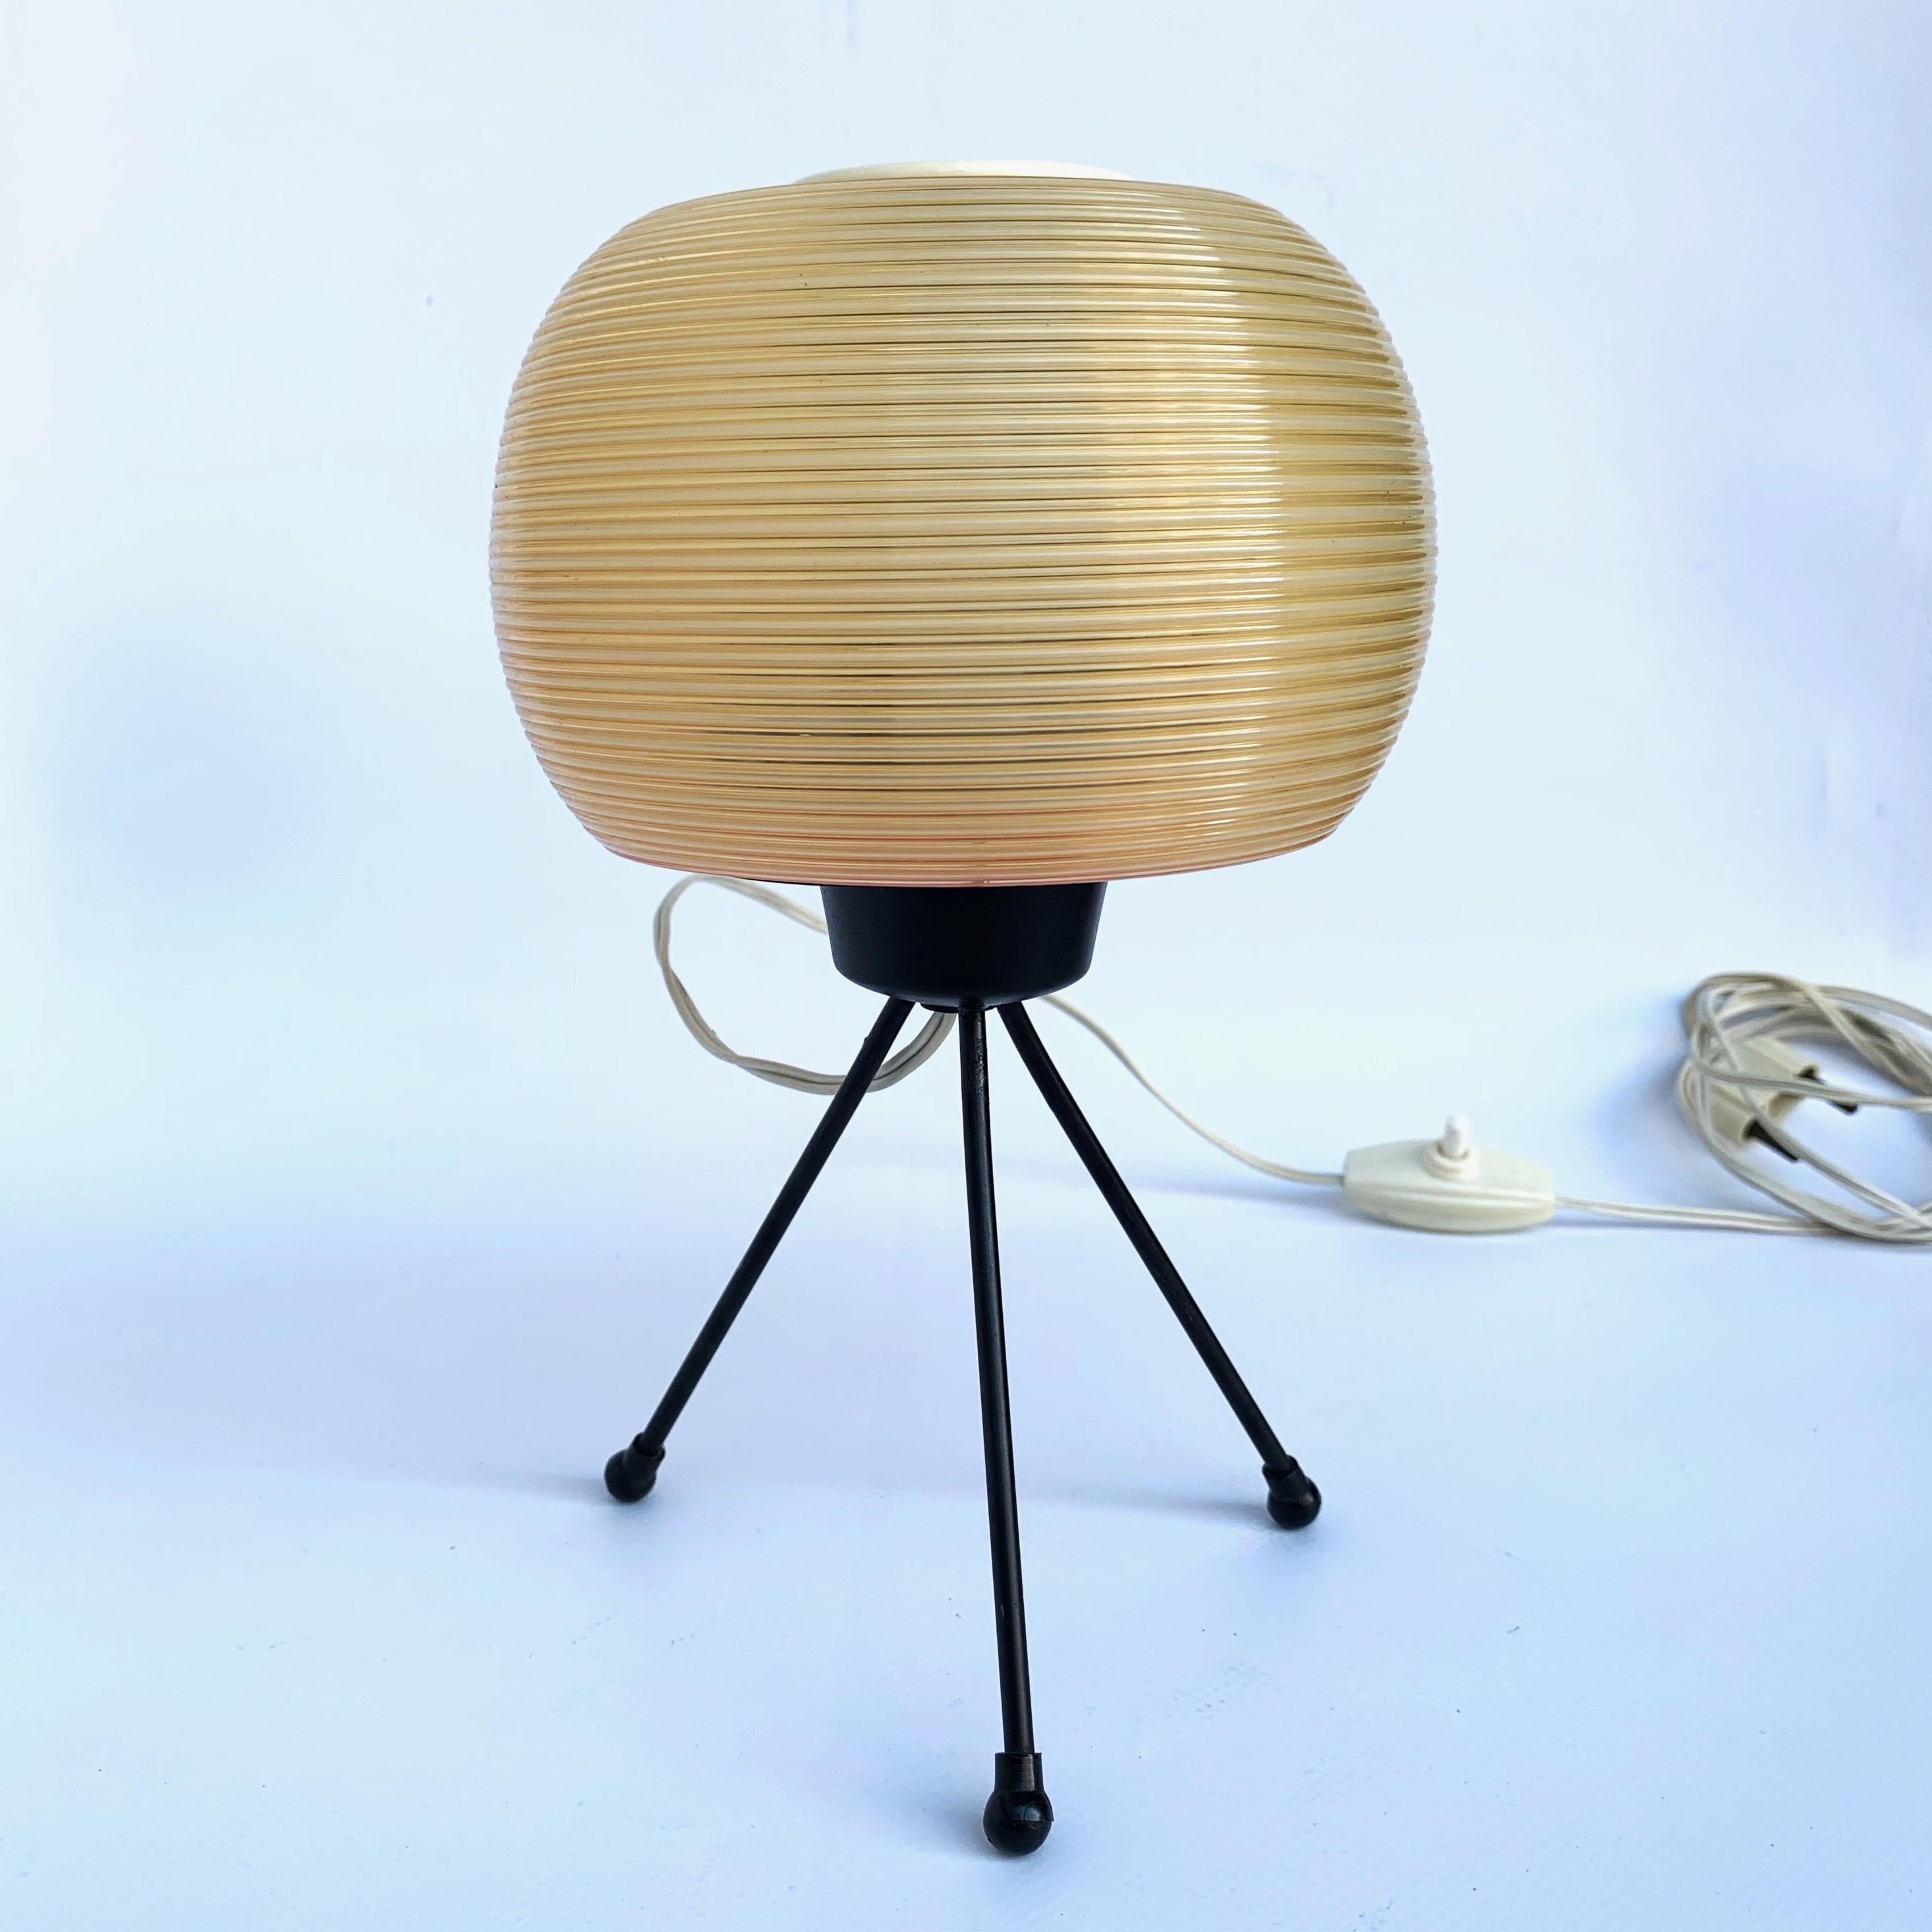 French Rotaflex Table Lamp, Disderot ARP Guariche Mortar Motte Design 1950s Table Lamp